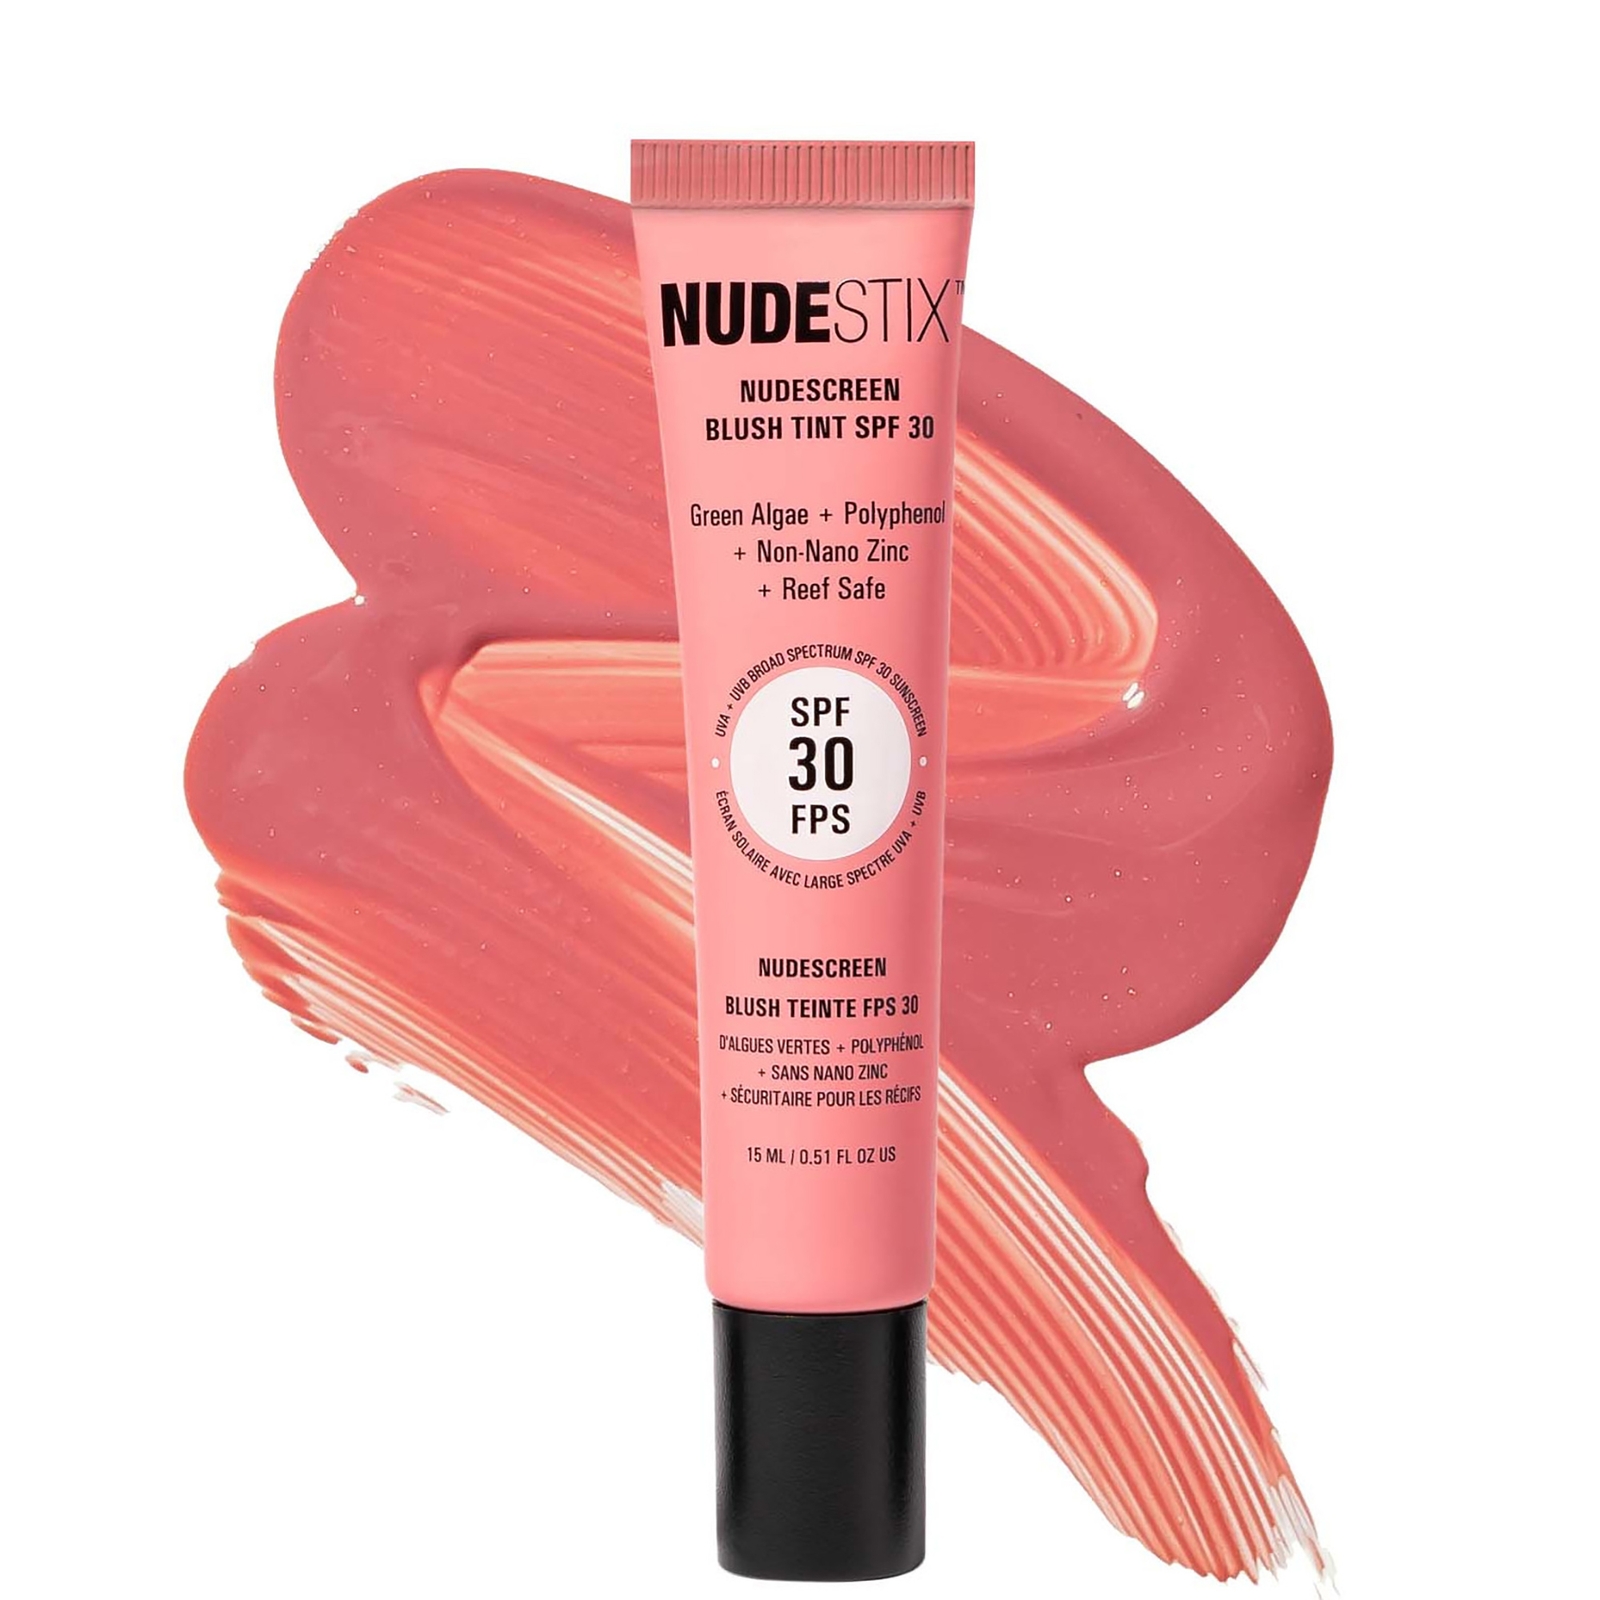 Nudestix Nudescreen Blush Tint Spf 30 15ml (various Shades) - Sunny Sweet Cheeks In White